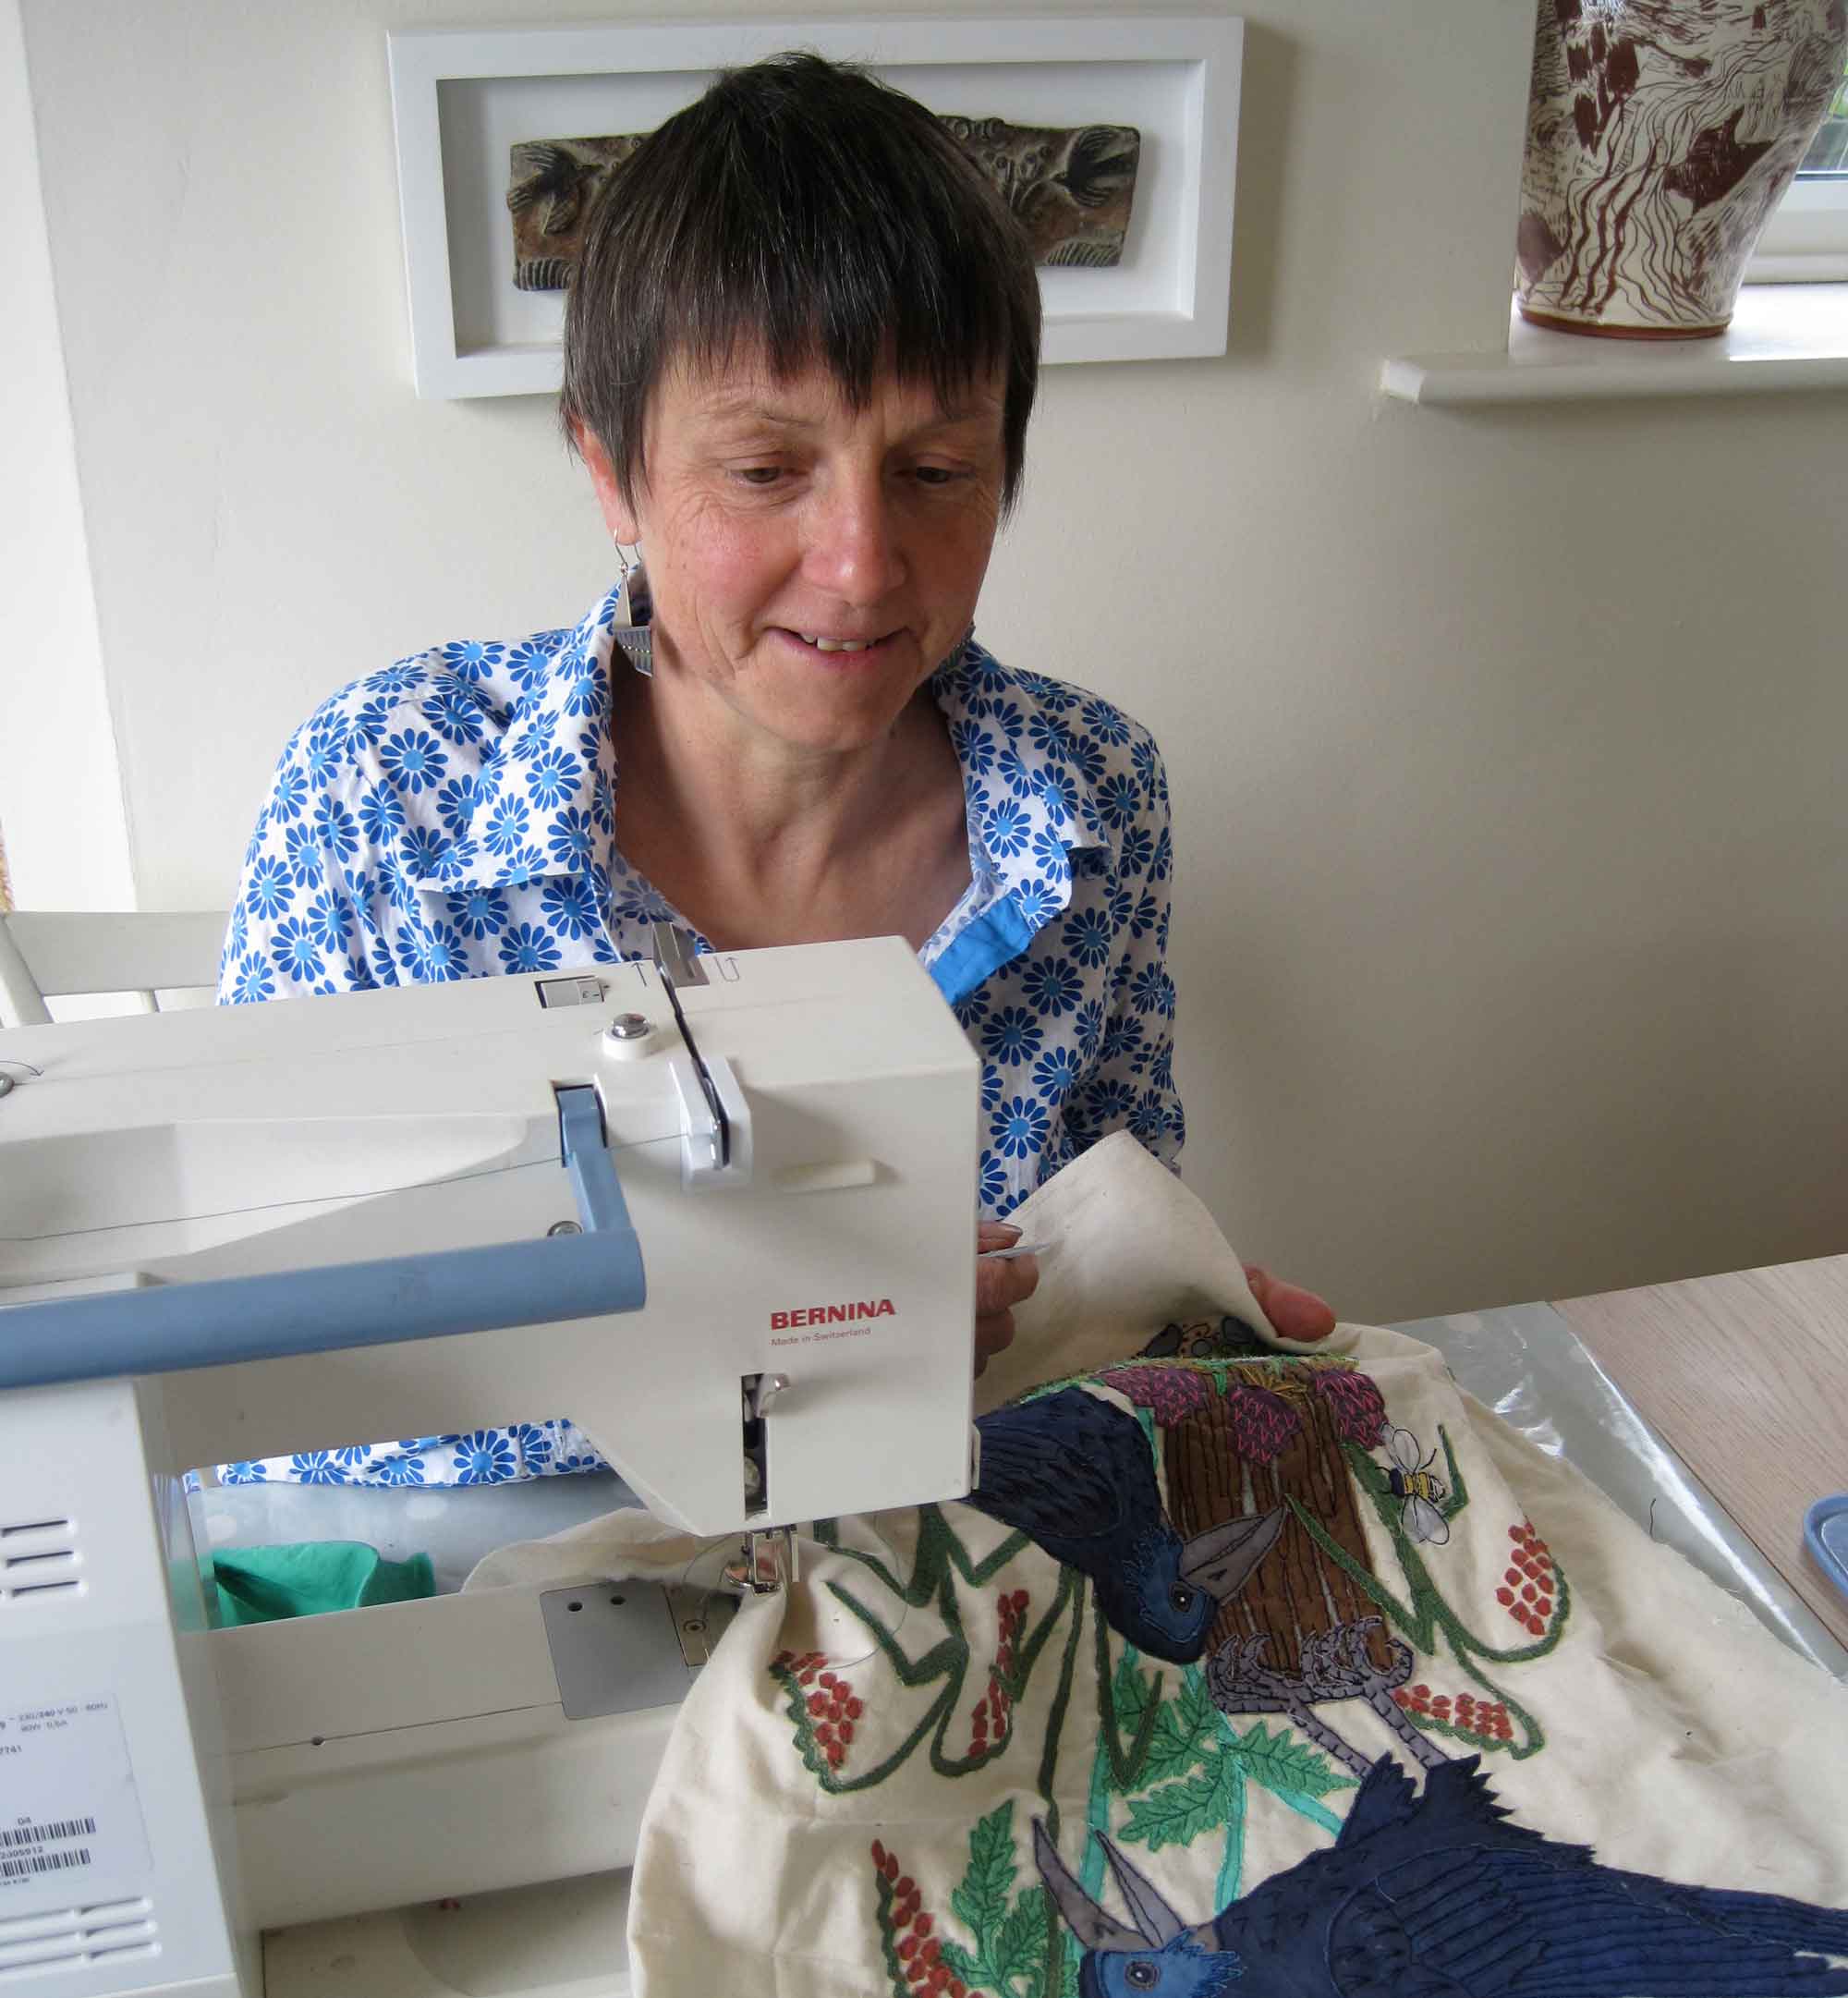 Textile artist Janet Browne